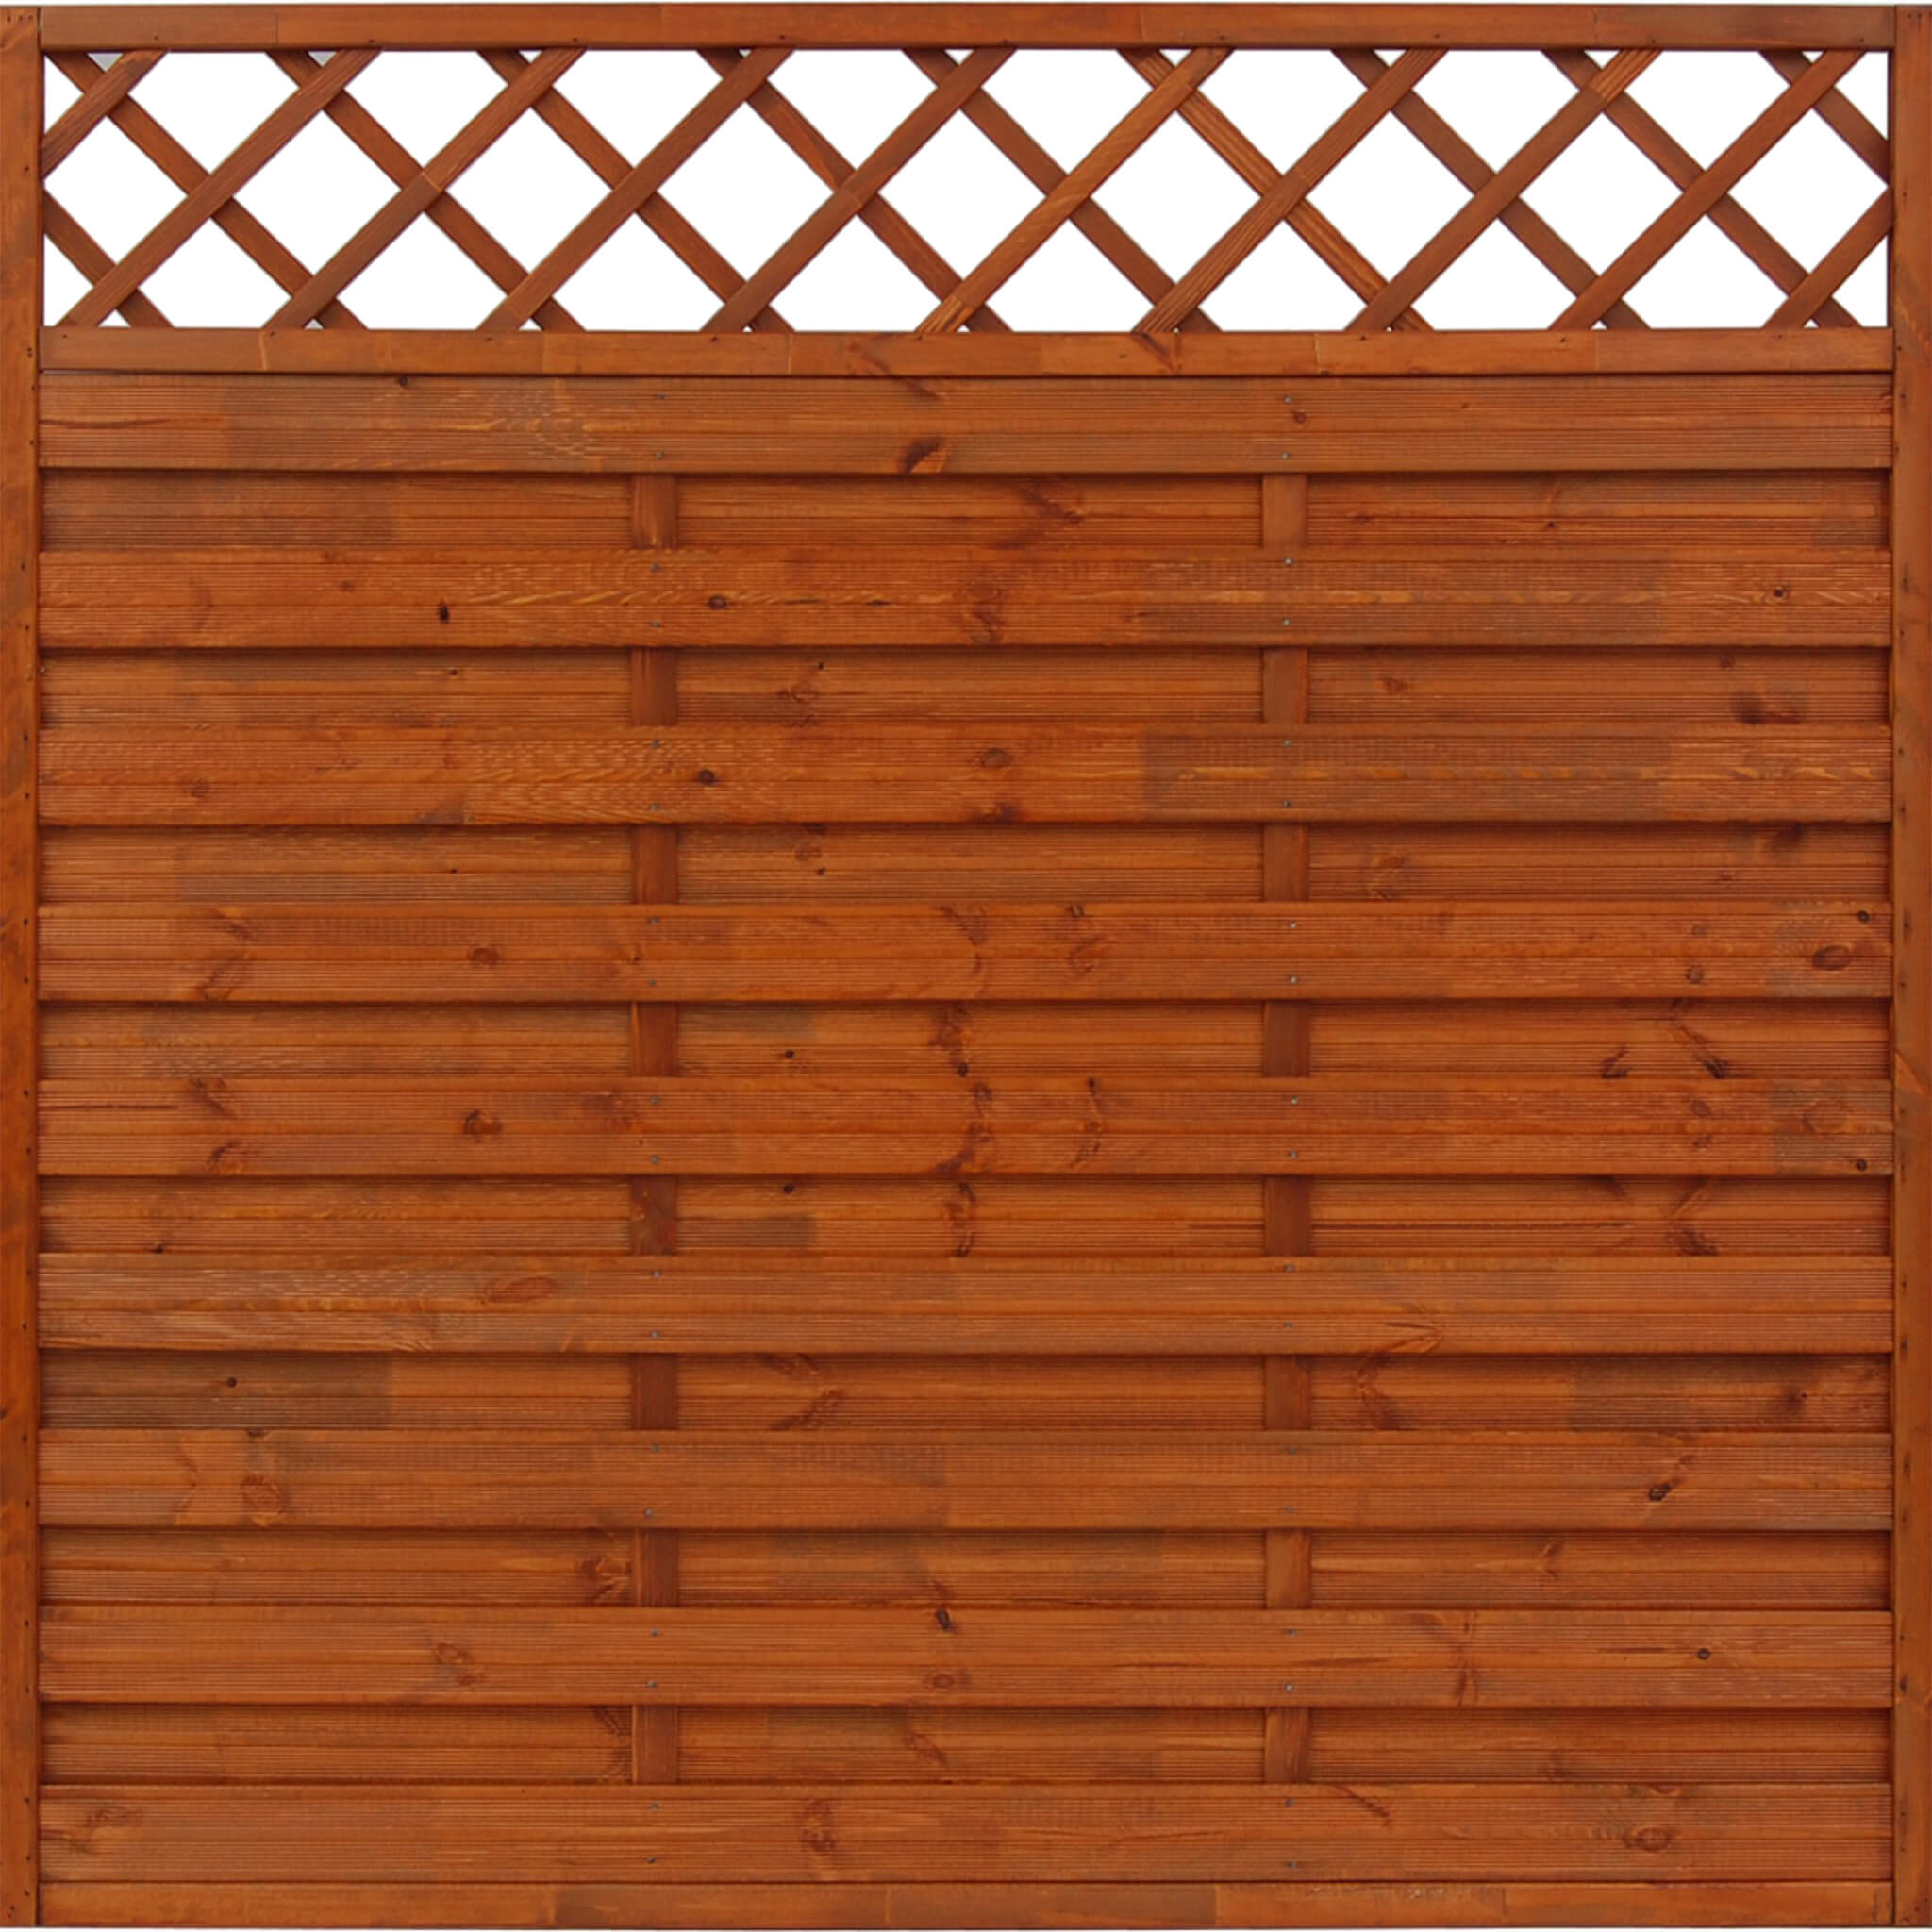 5 9 Ft Decorative Lattice Fence Panels